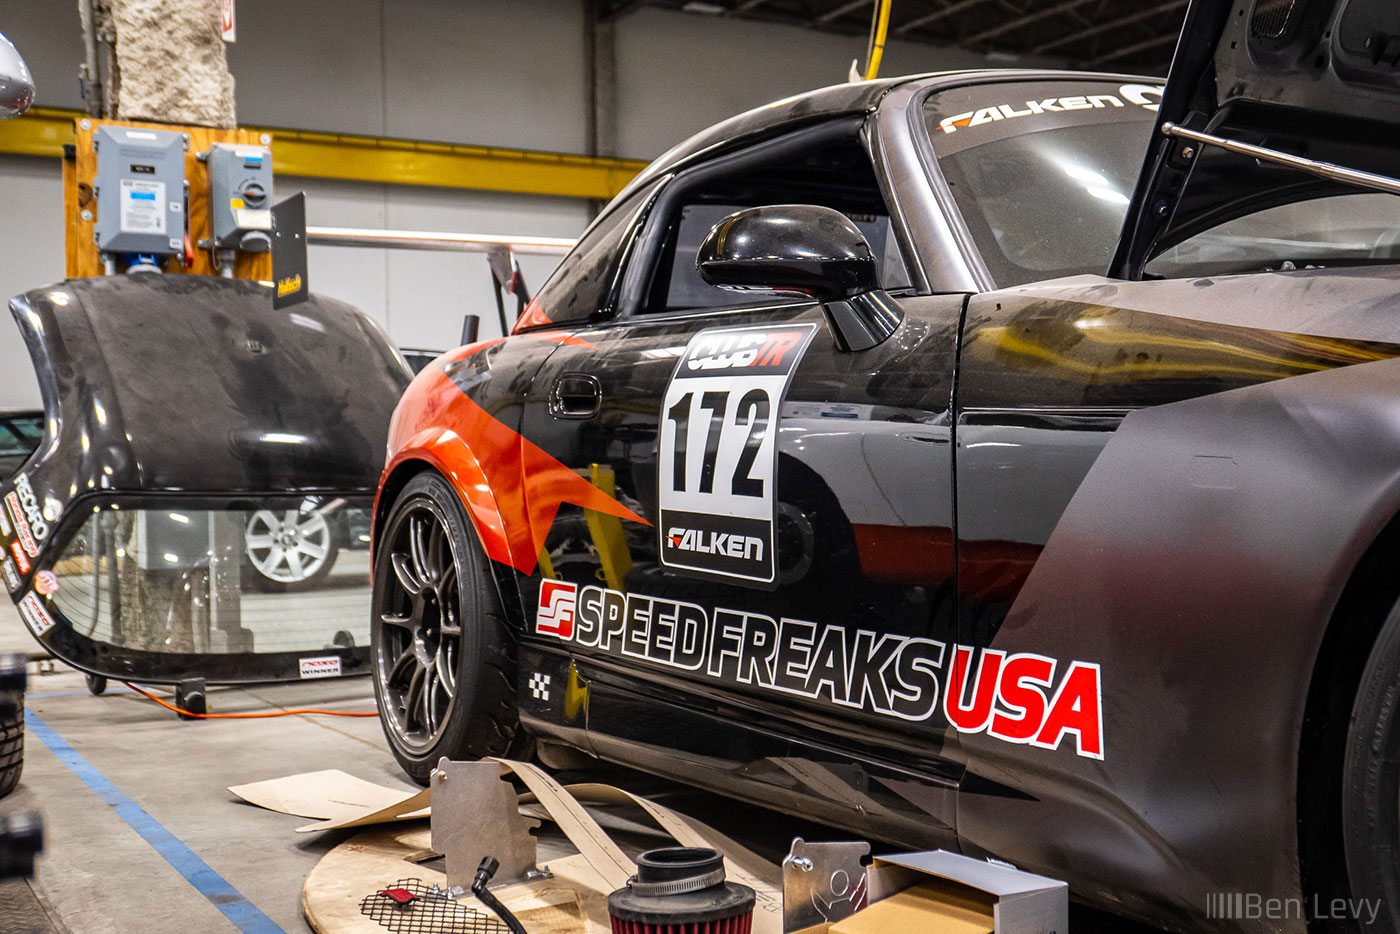 Speed Freaks USA sticker on Black Honda S2000